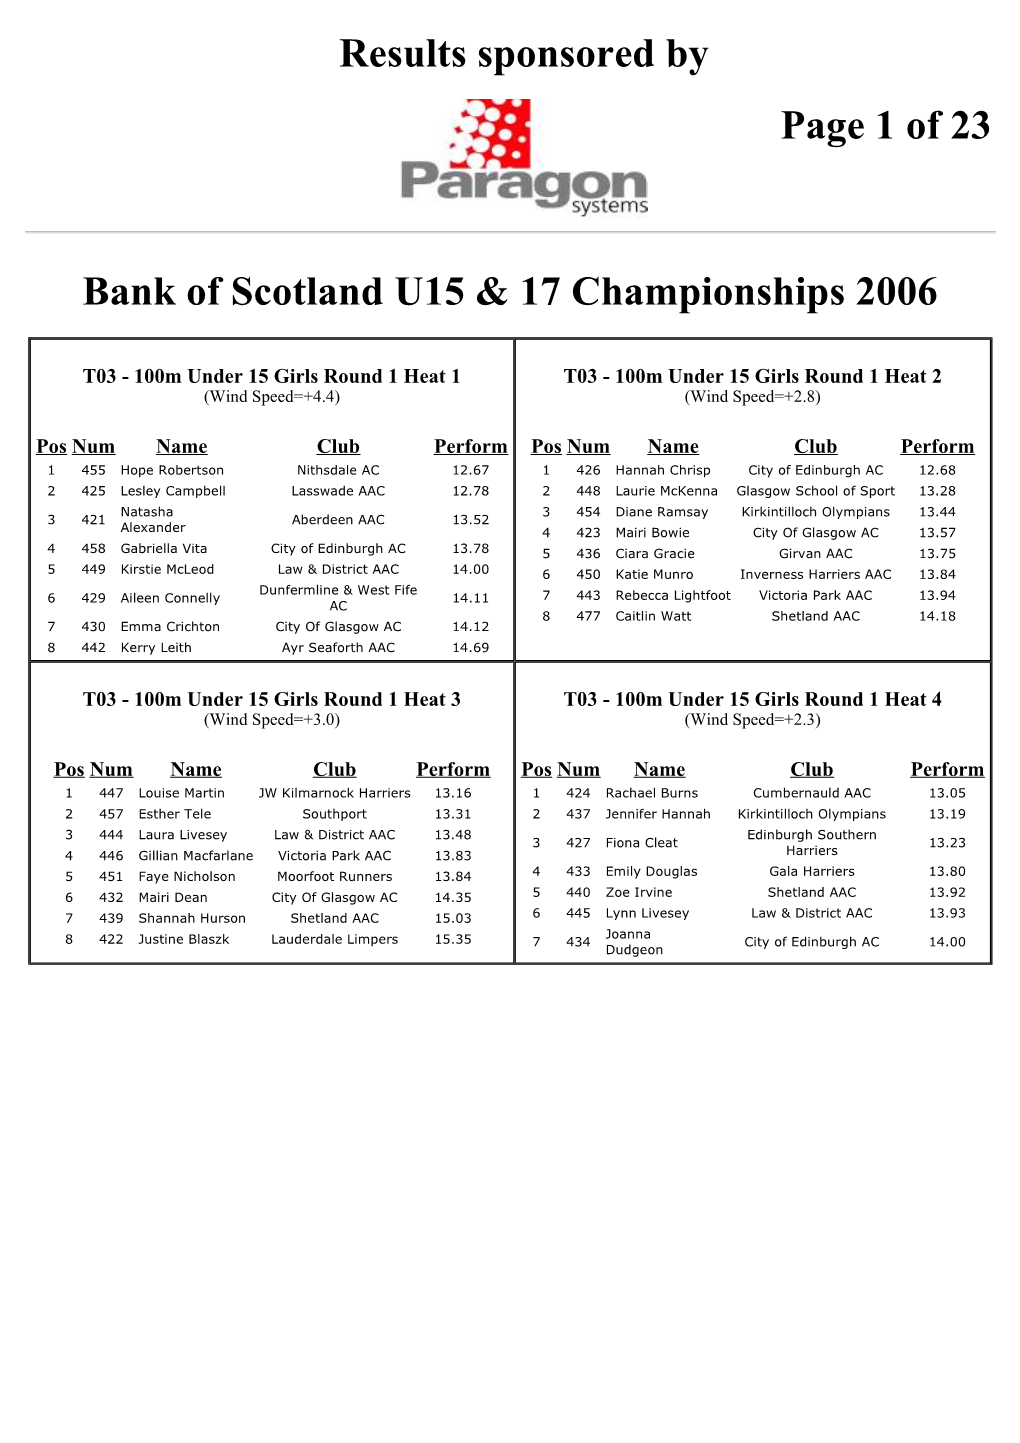 Bank of Scotland U15 & 17 Championships 2006 Results